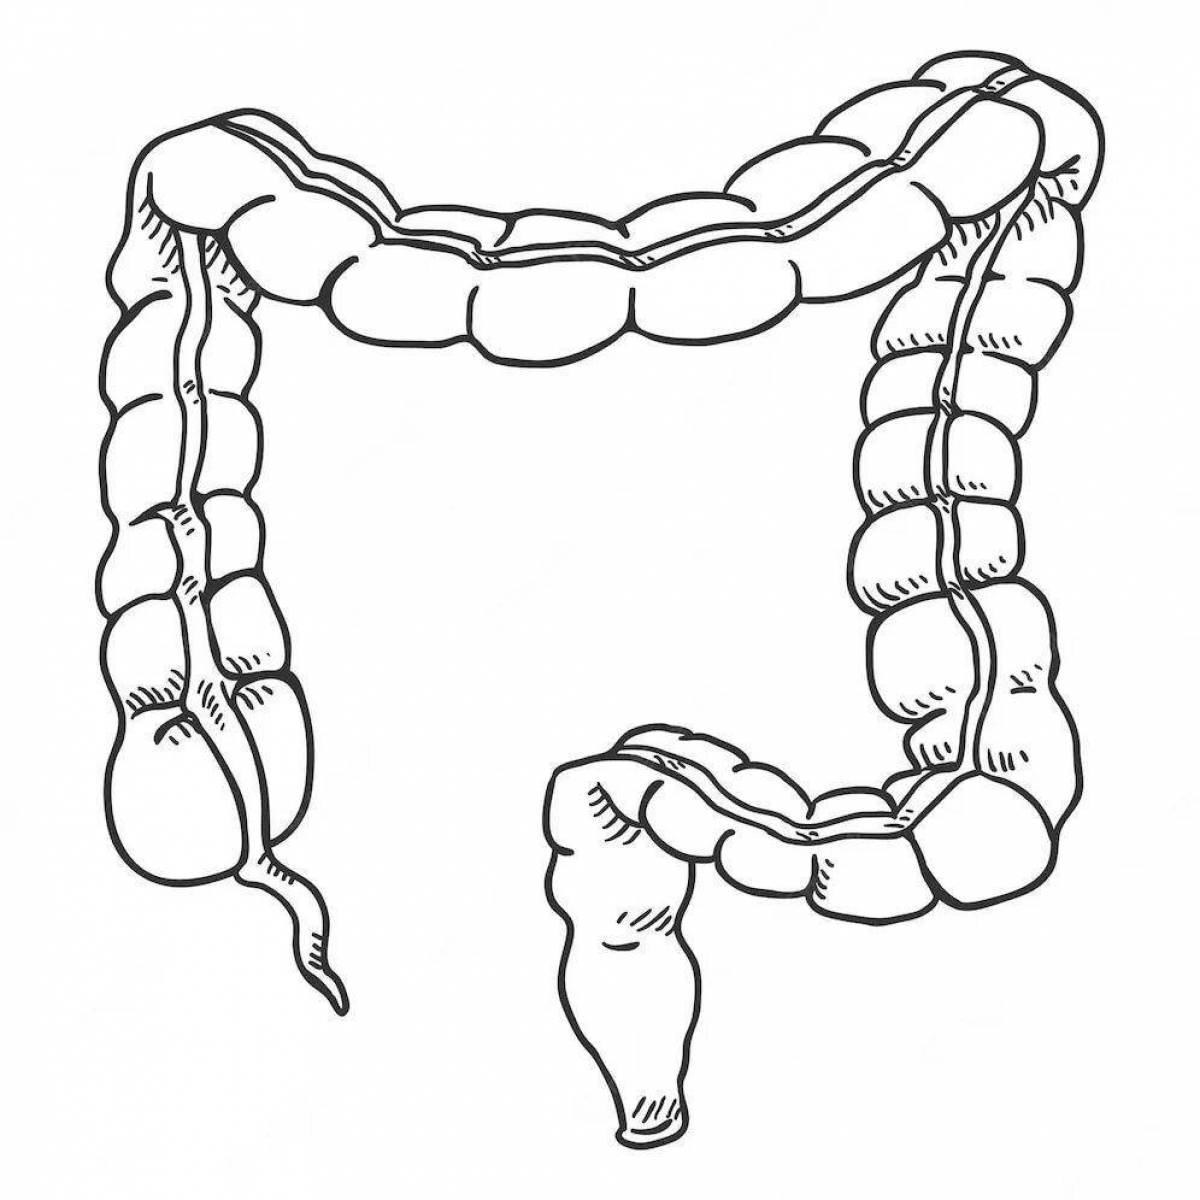 Unique human intestine coloring page